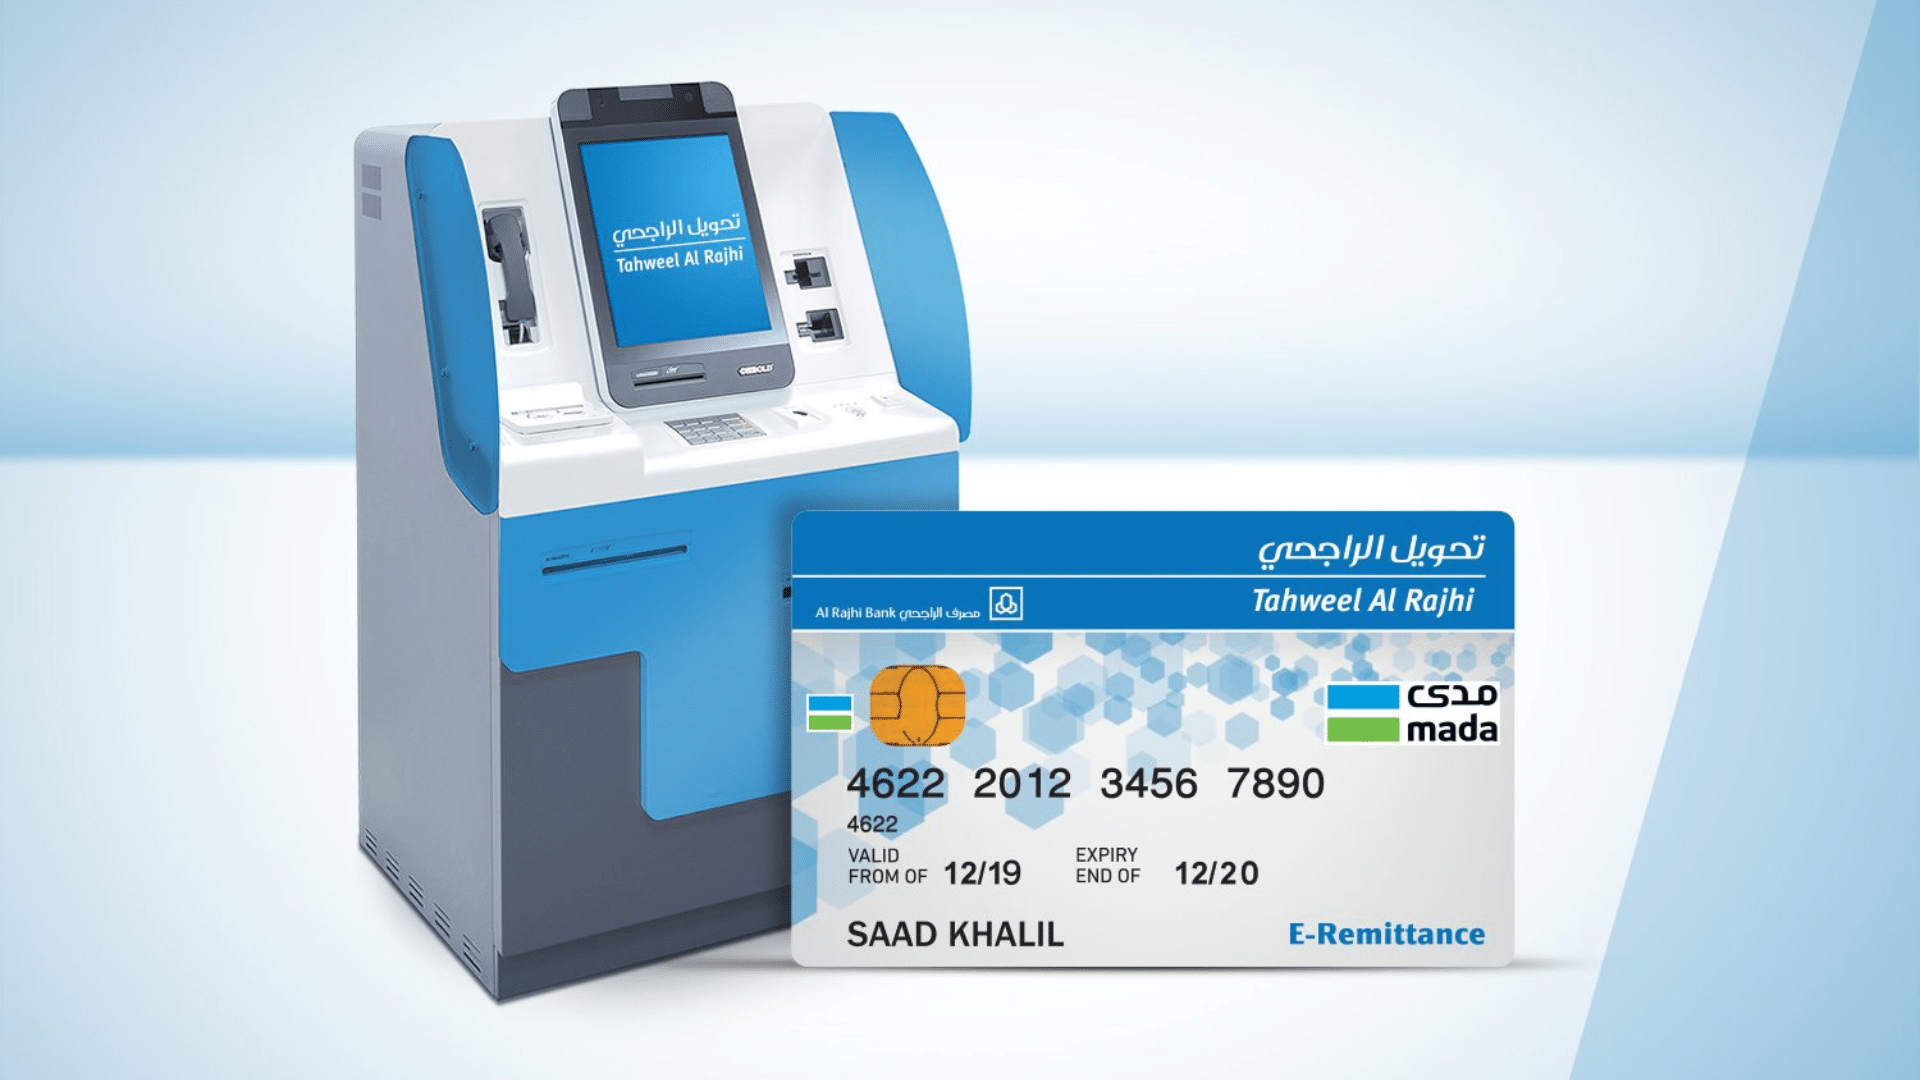 How to Obtain a Tahweel Al Rajhi E-Remittance Card